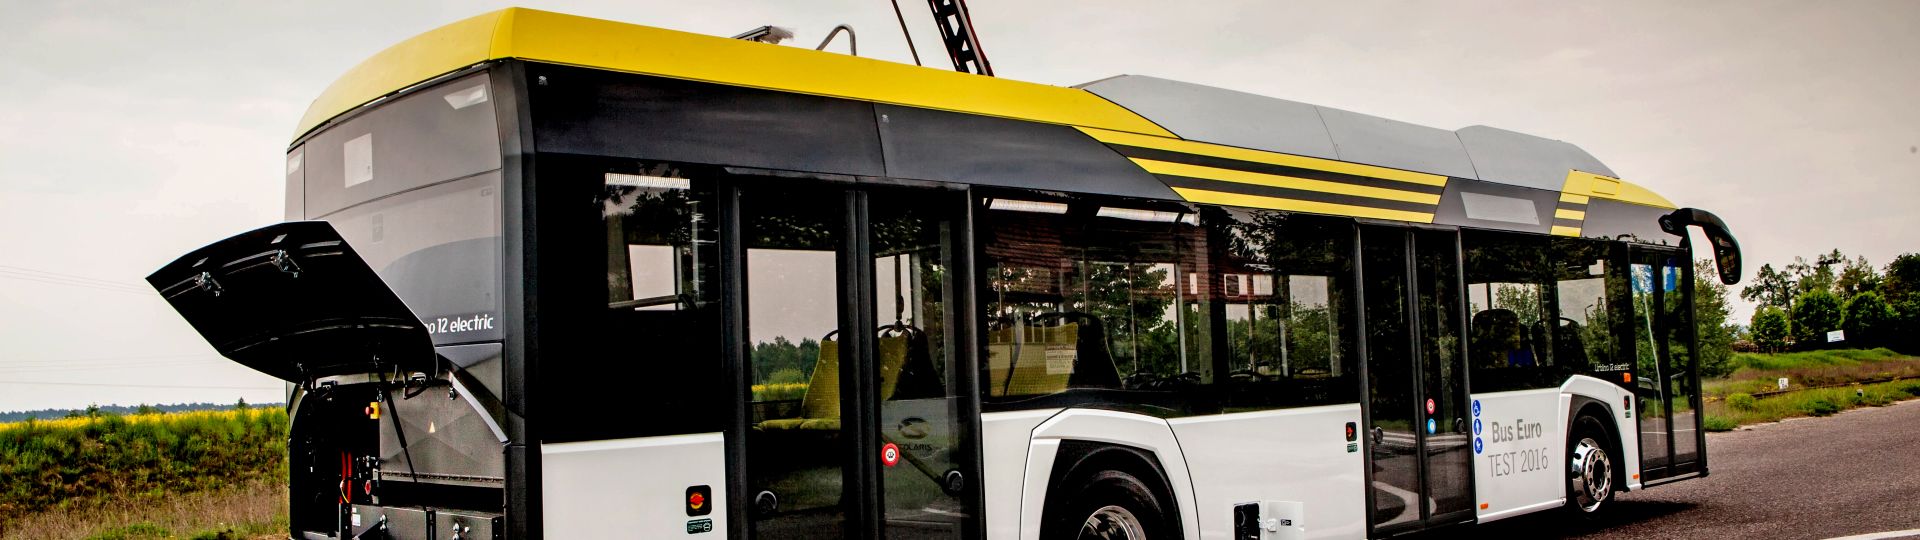 Electric Solaris Urbino runs for European “Bus of the Year” title